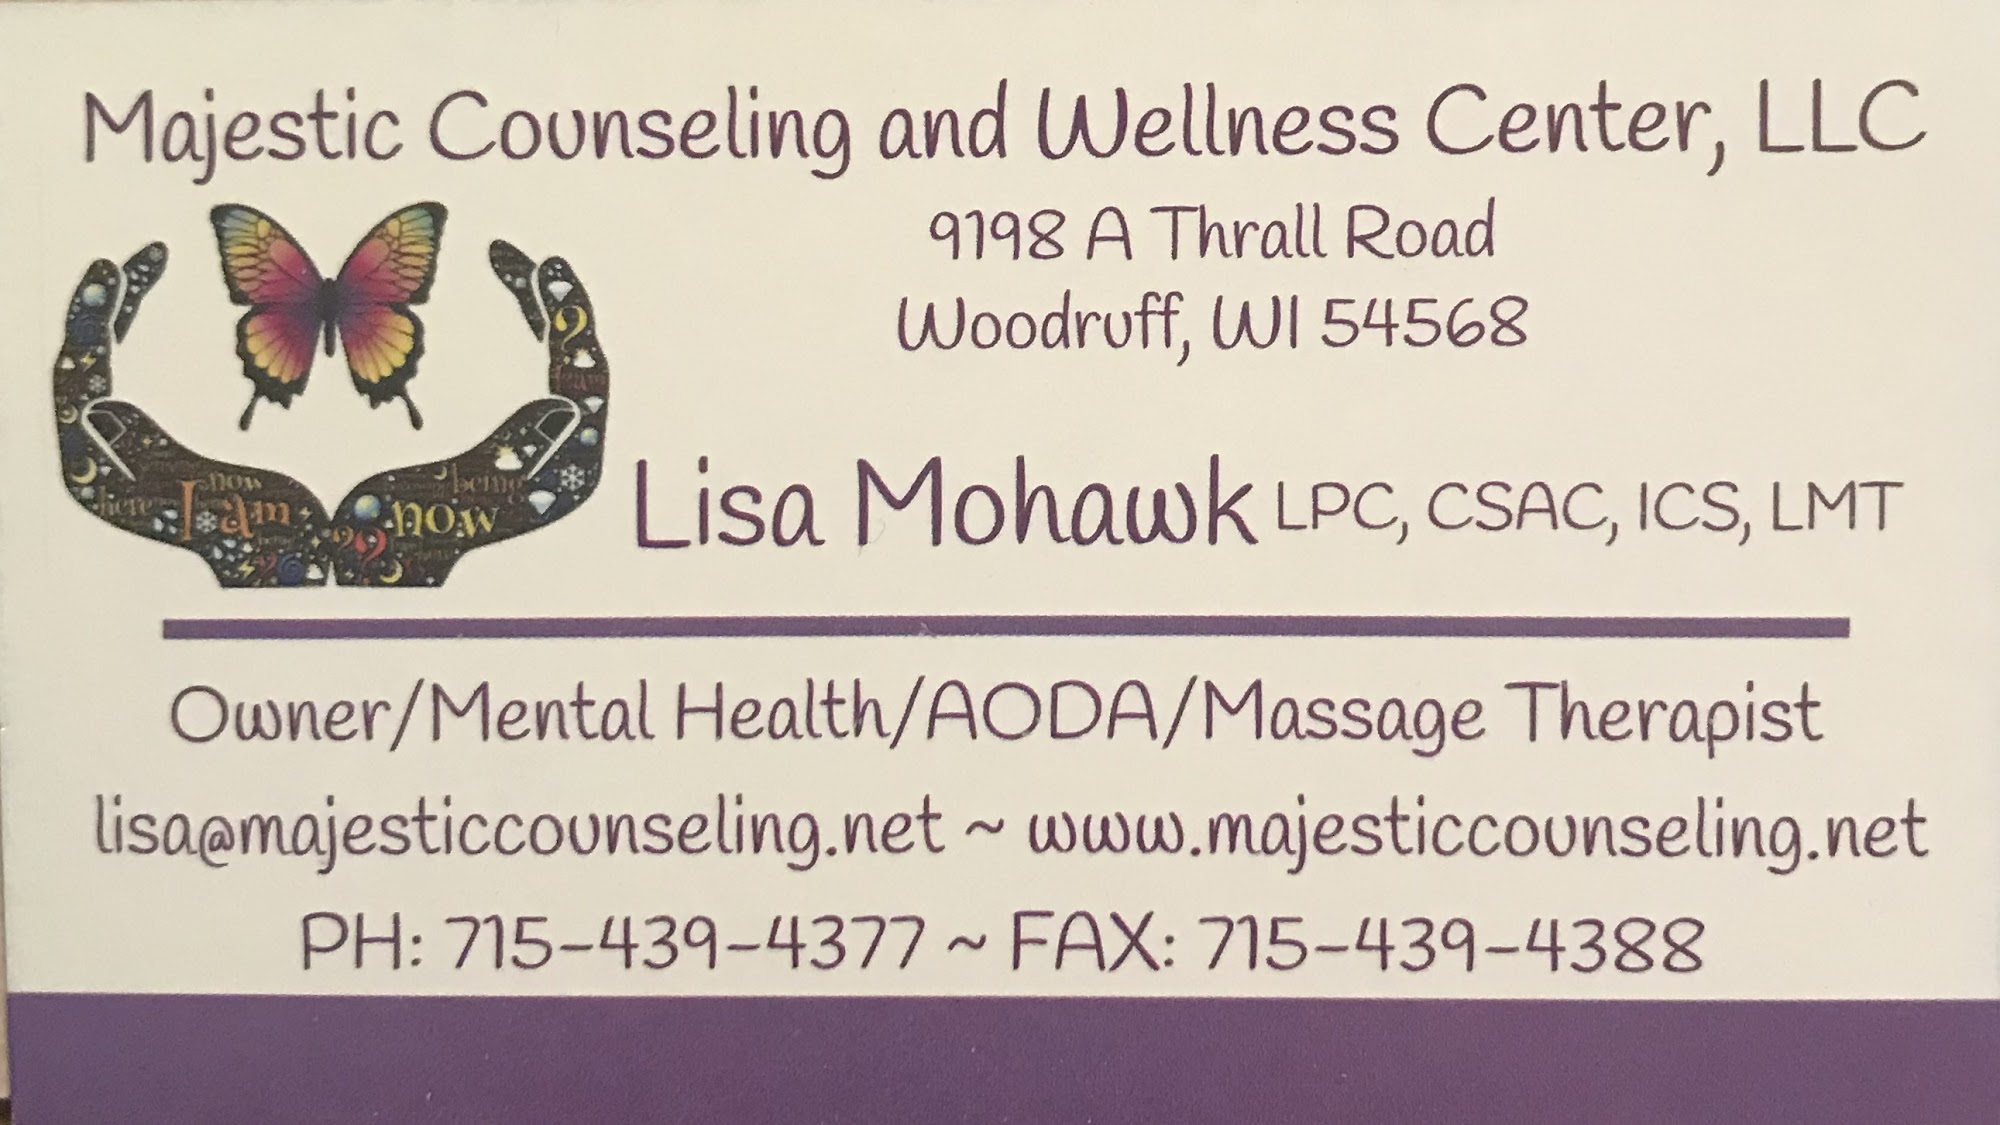 Majestic Wellness Center 9198 A Thrall Rd, Woodruff Wisconsin 54568